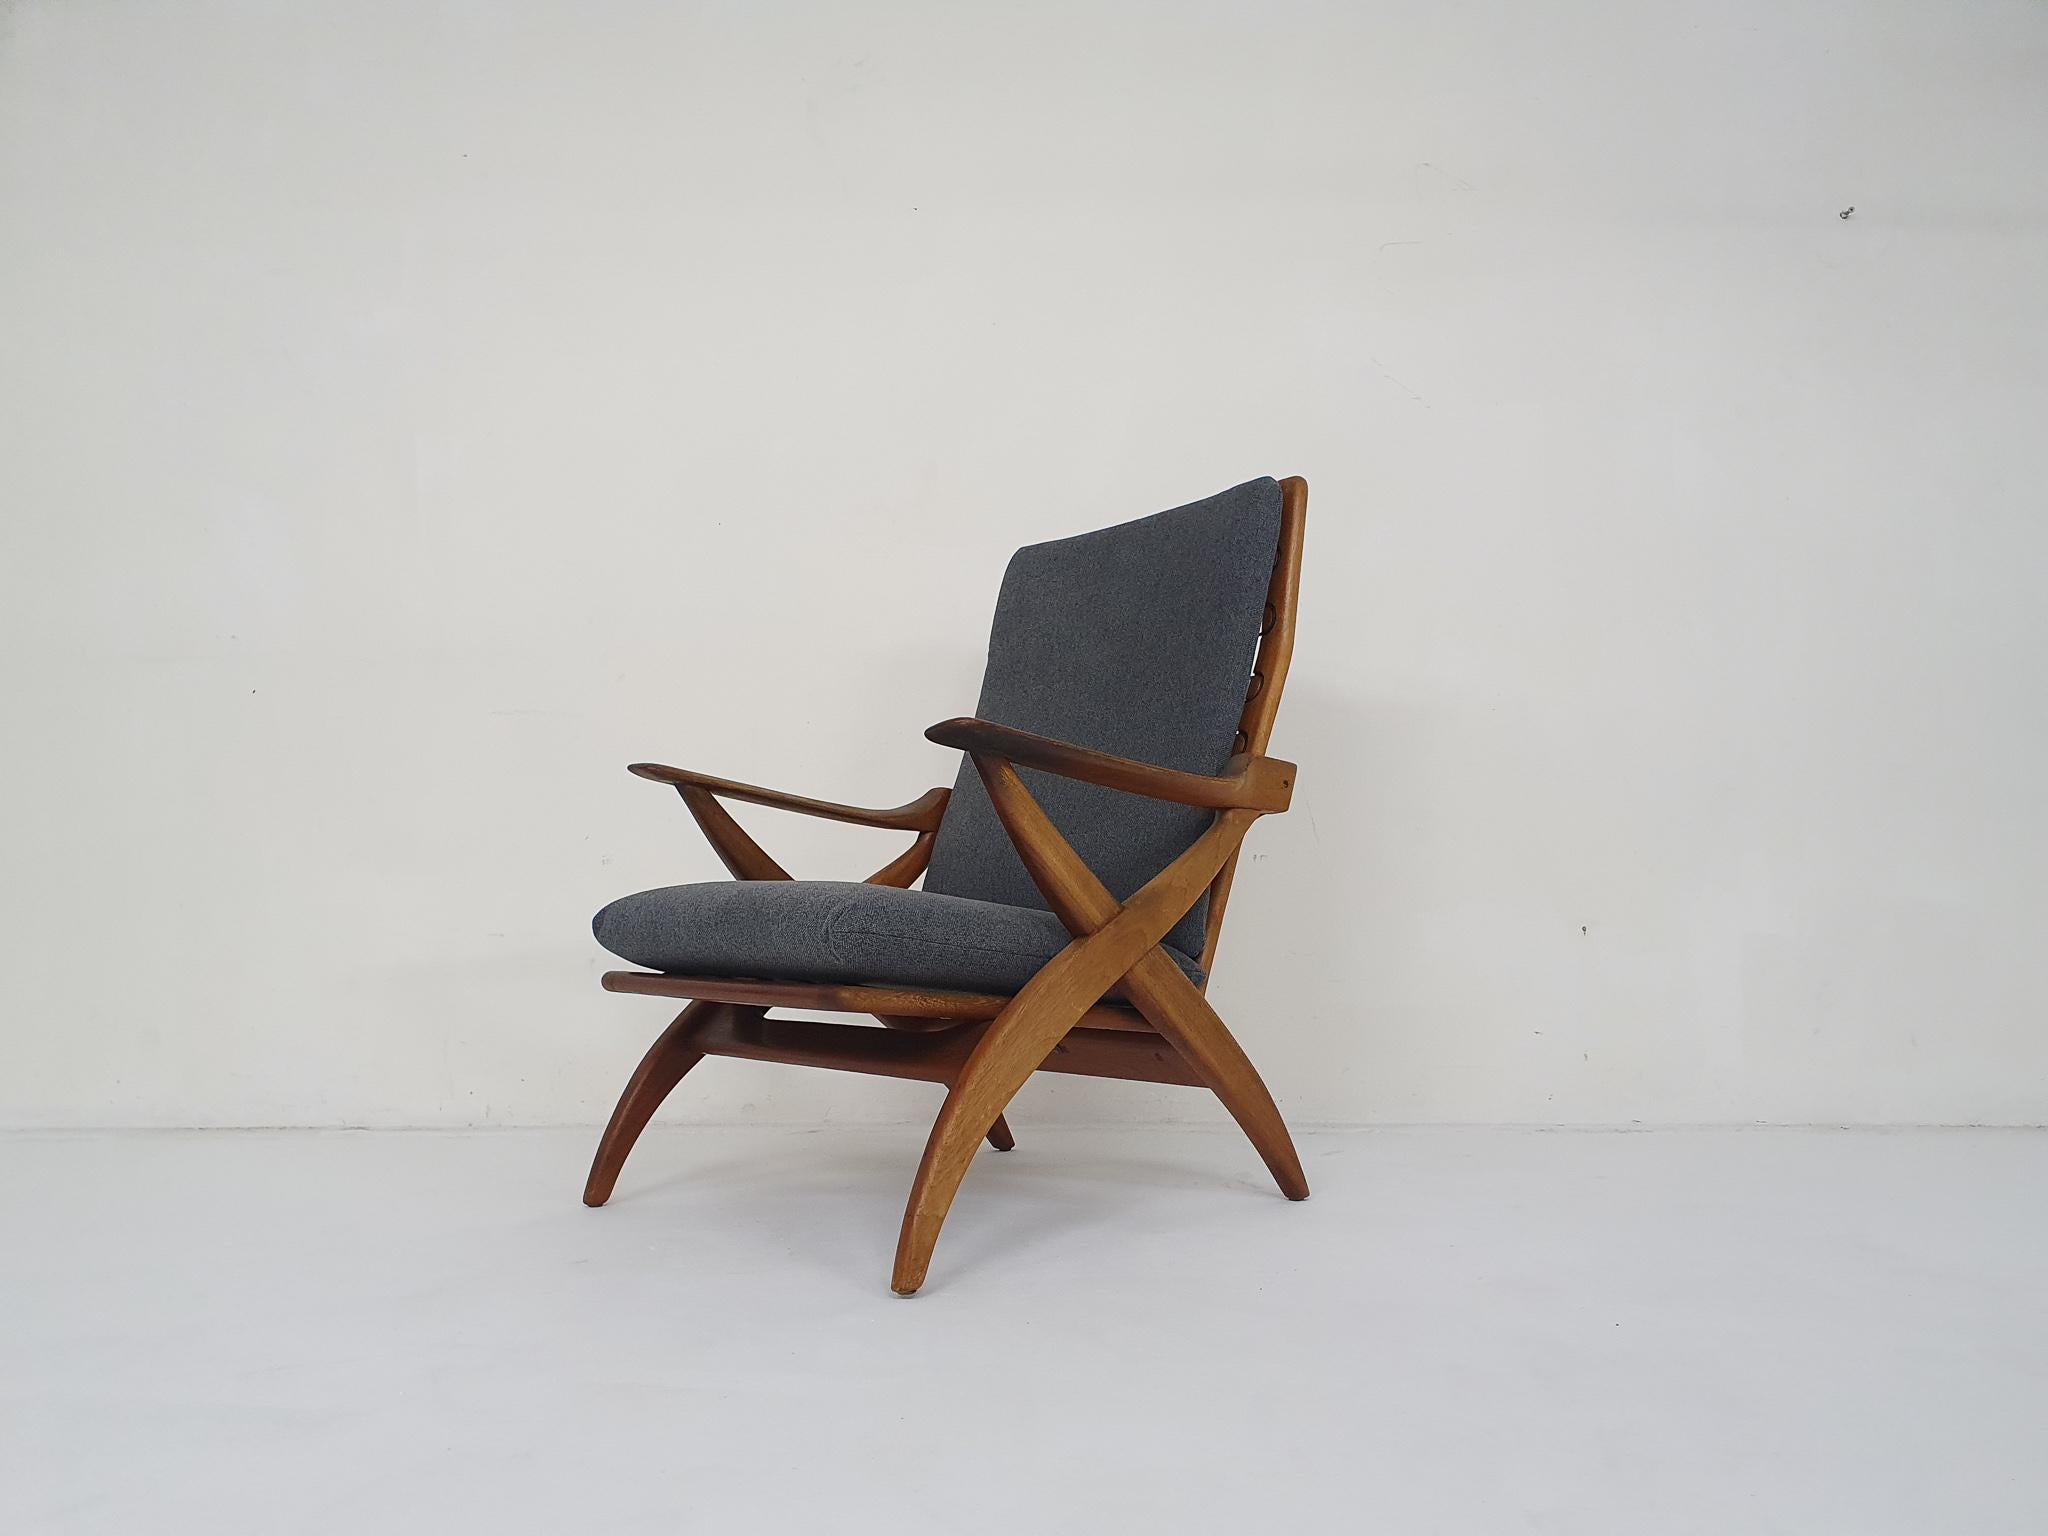 Scandinavian Modern Mid-Century Teak Lounge Chair, by Topform, the Netherlands, 1950's